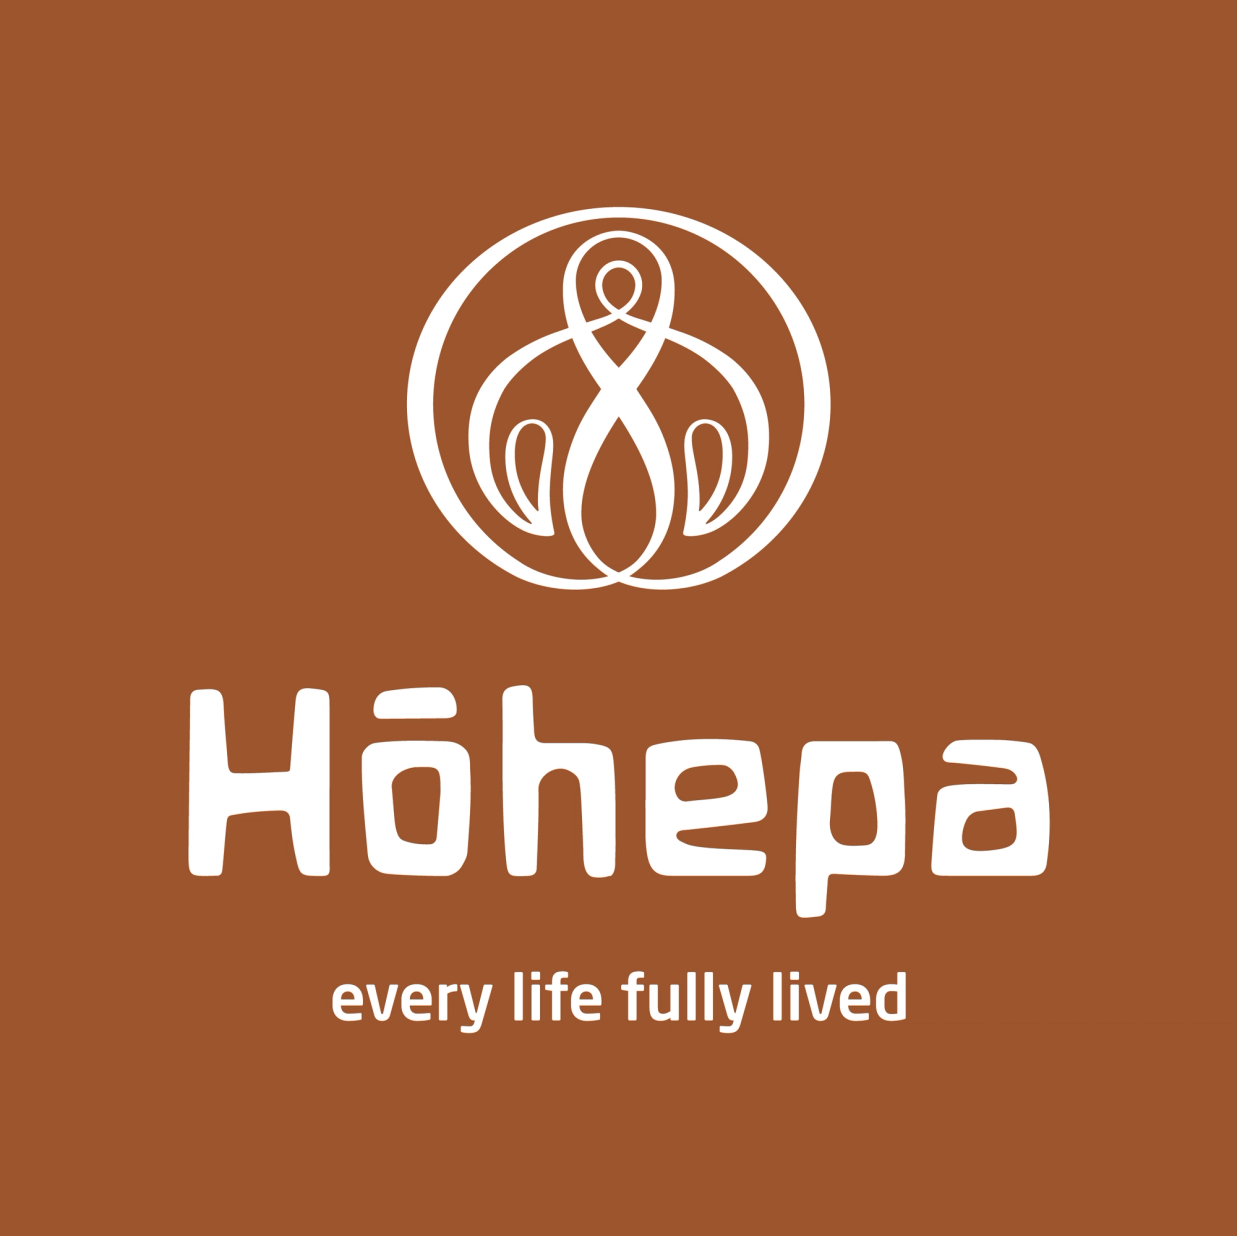 Hohepa